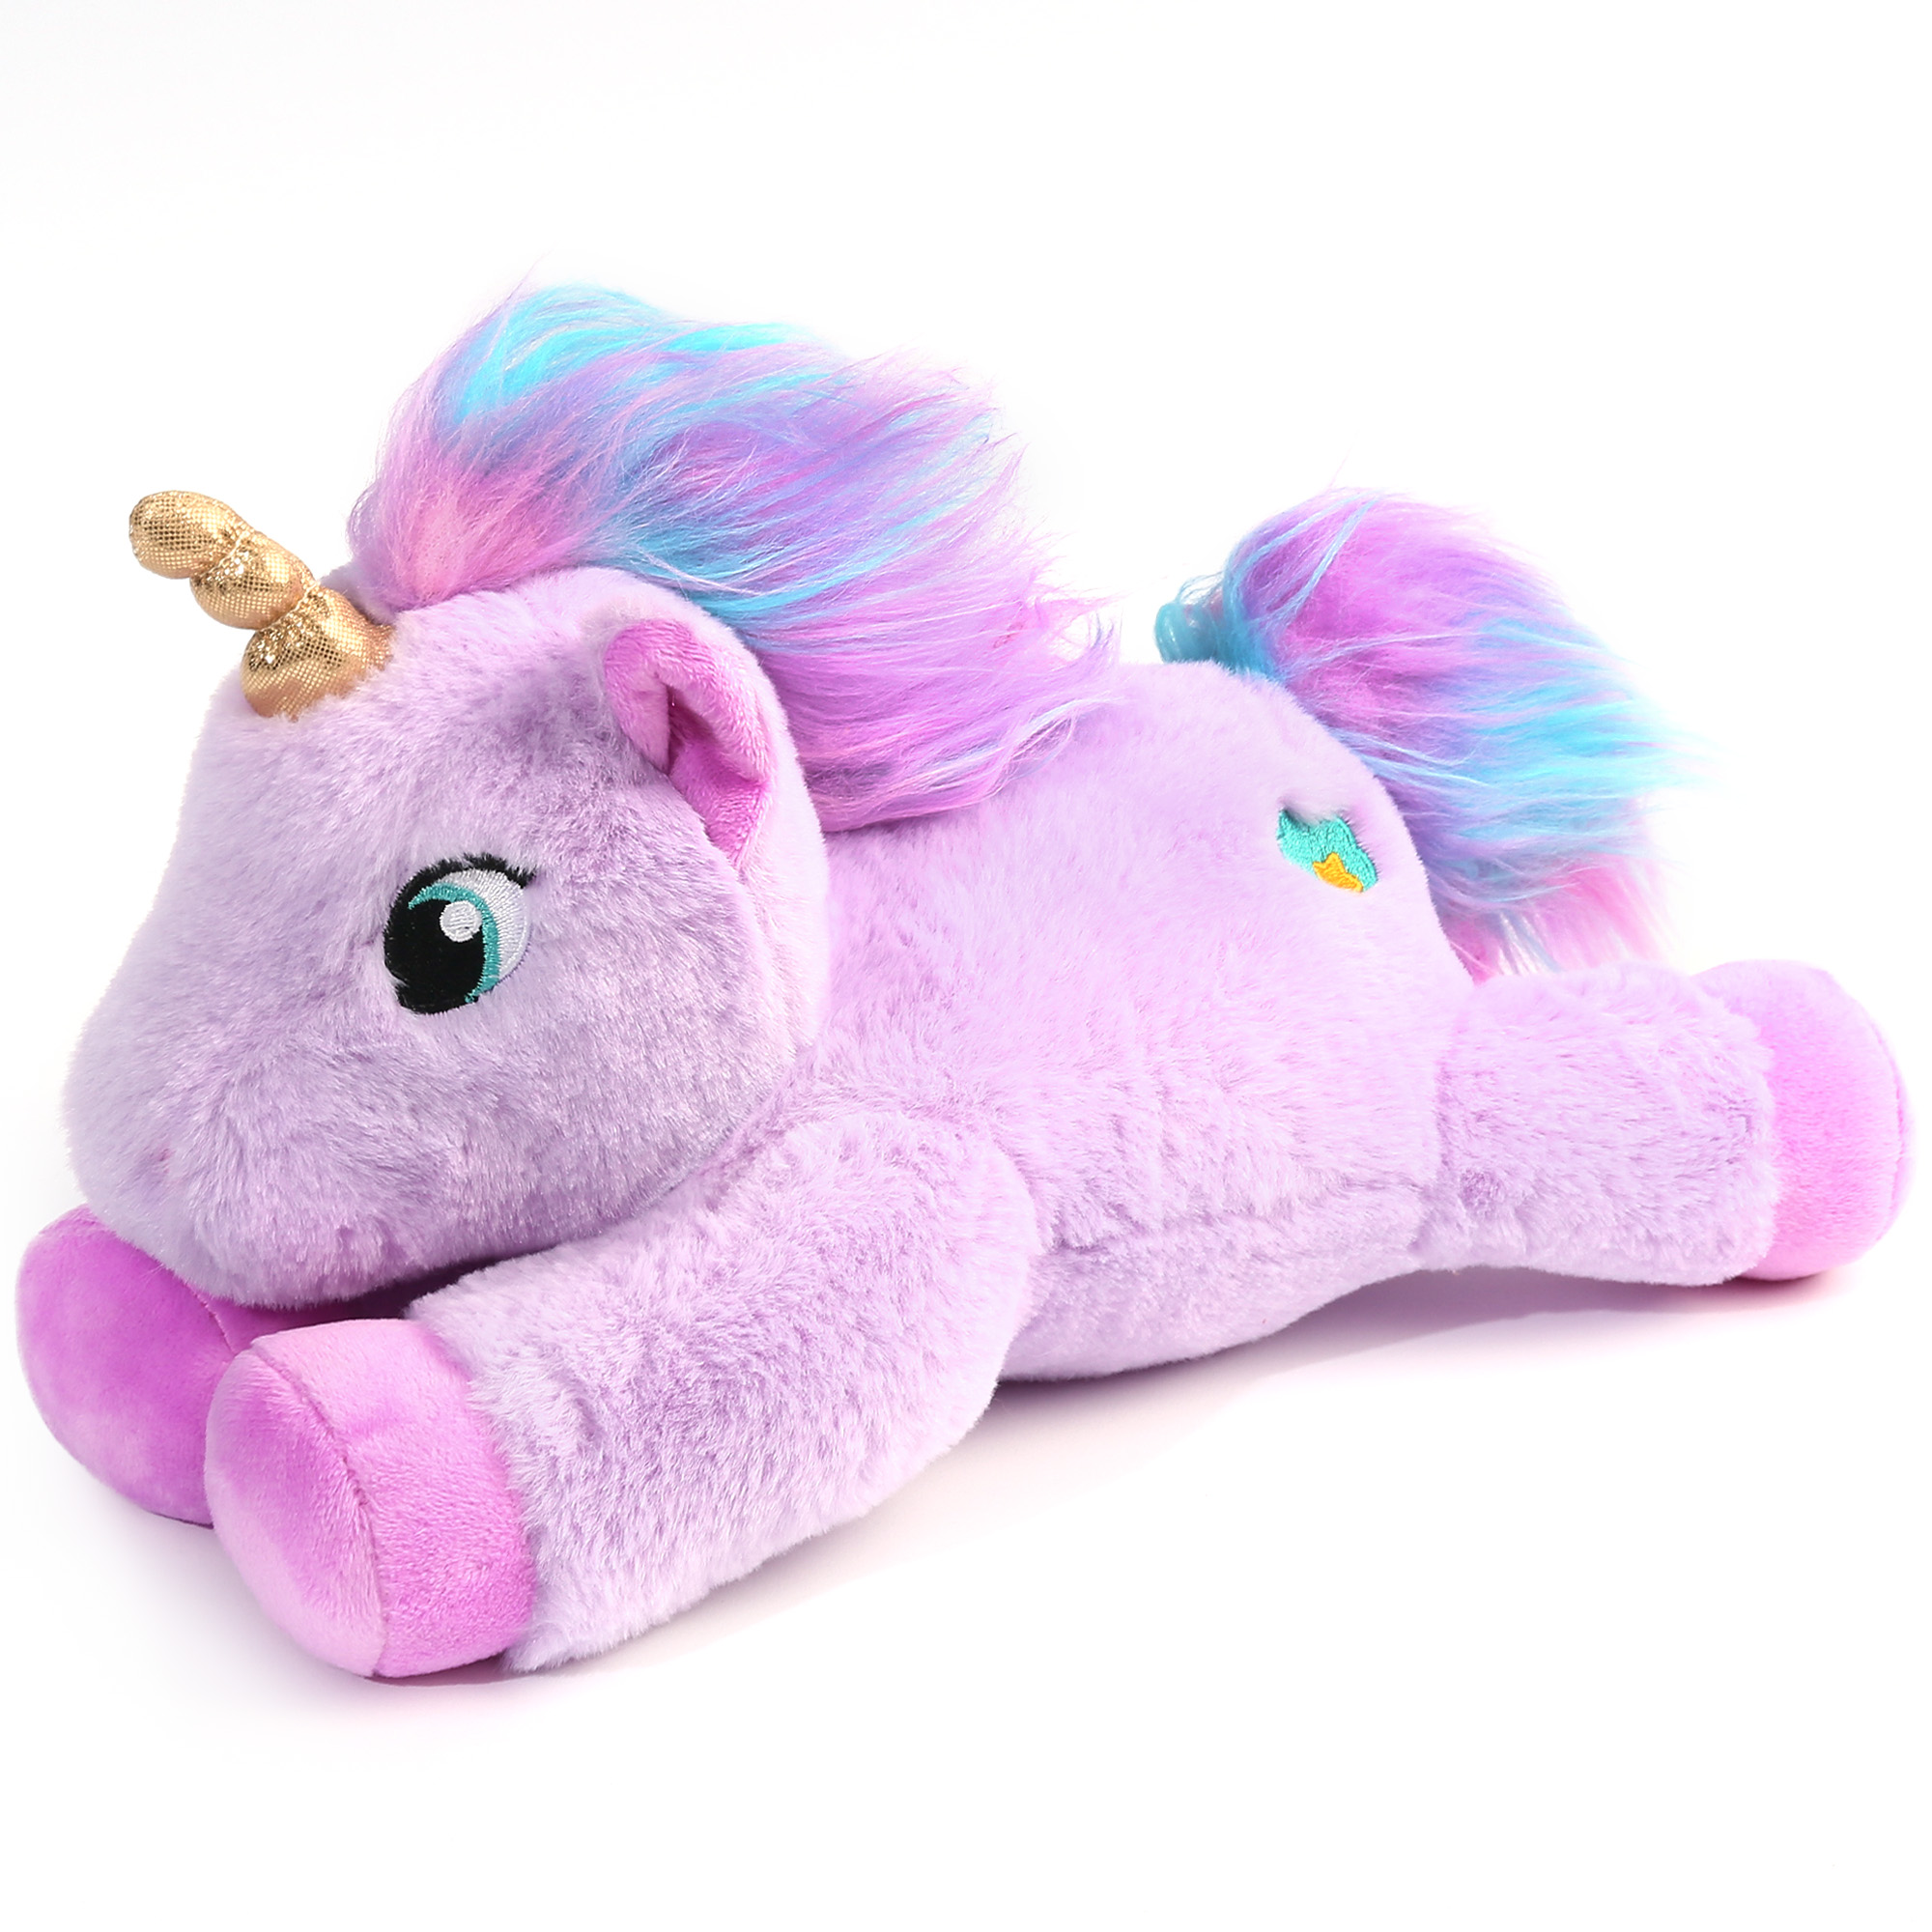 LotFancy 12 in Purple Unicorn Stuffed Animal Plush Toys for Kids, Girls, Boys - image 1 of 6